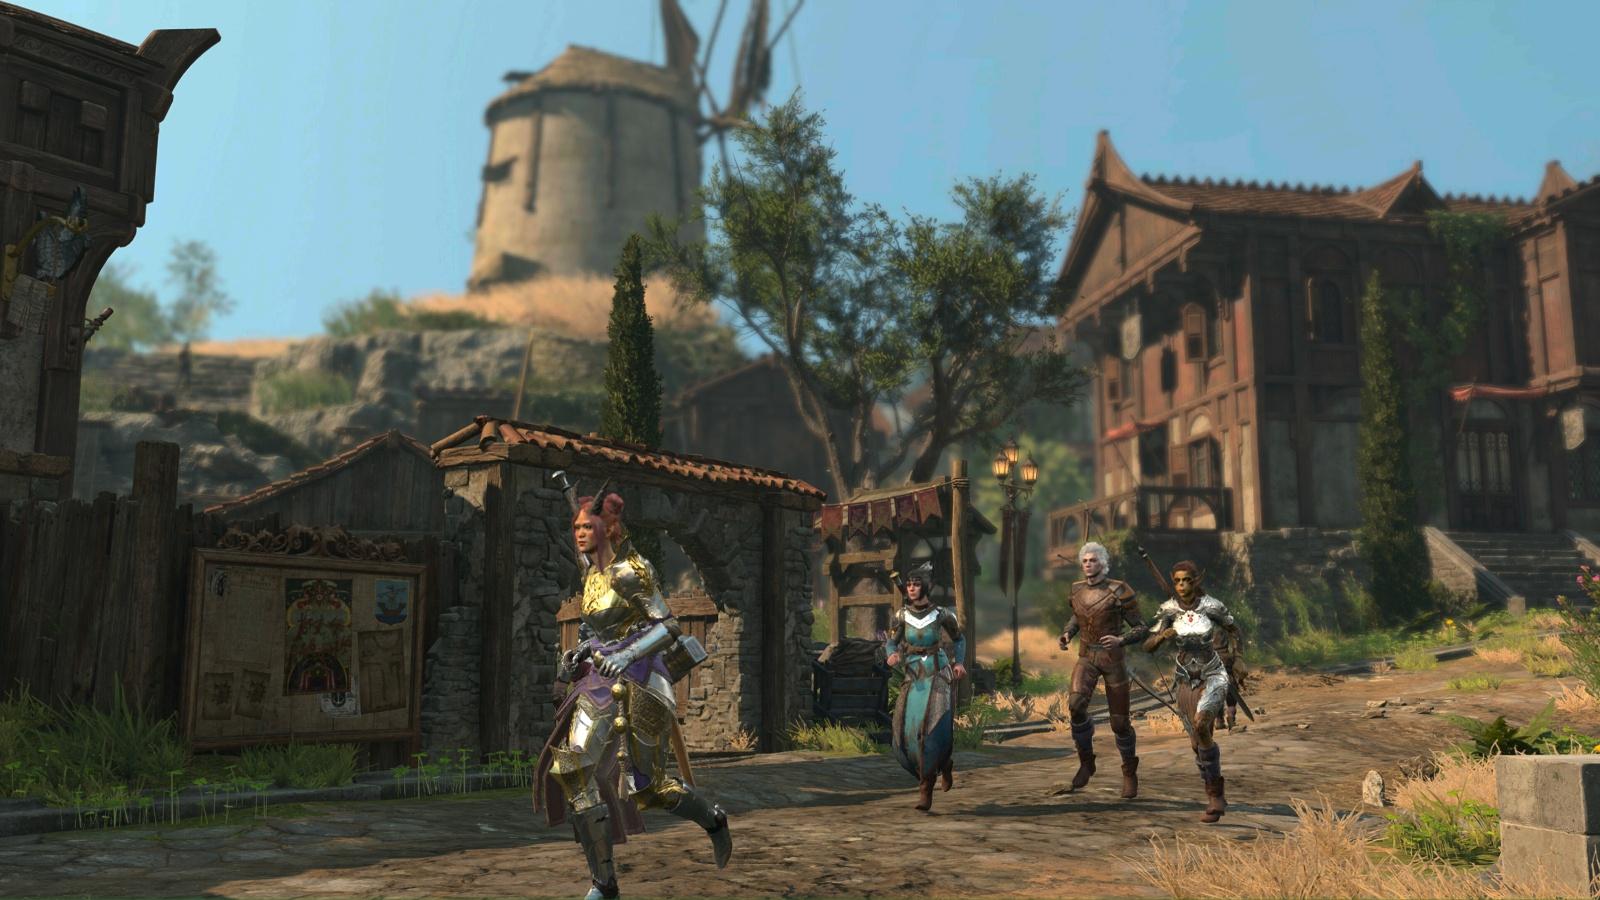 Baldur's Gate 3 is off to a good start on Steam